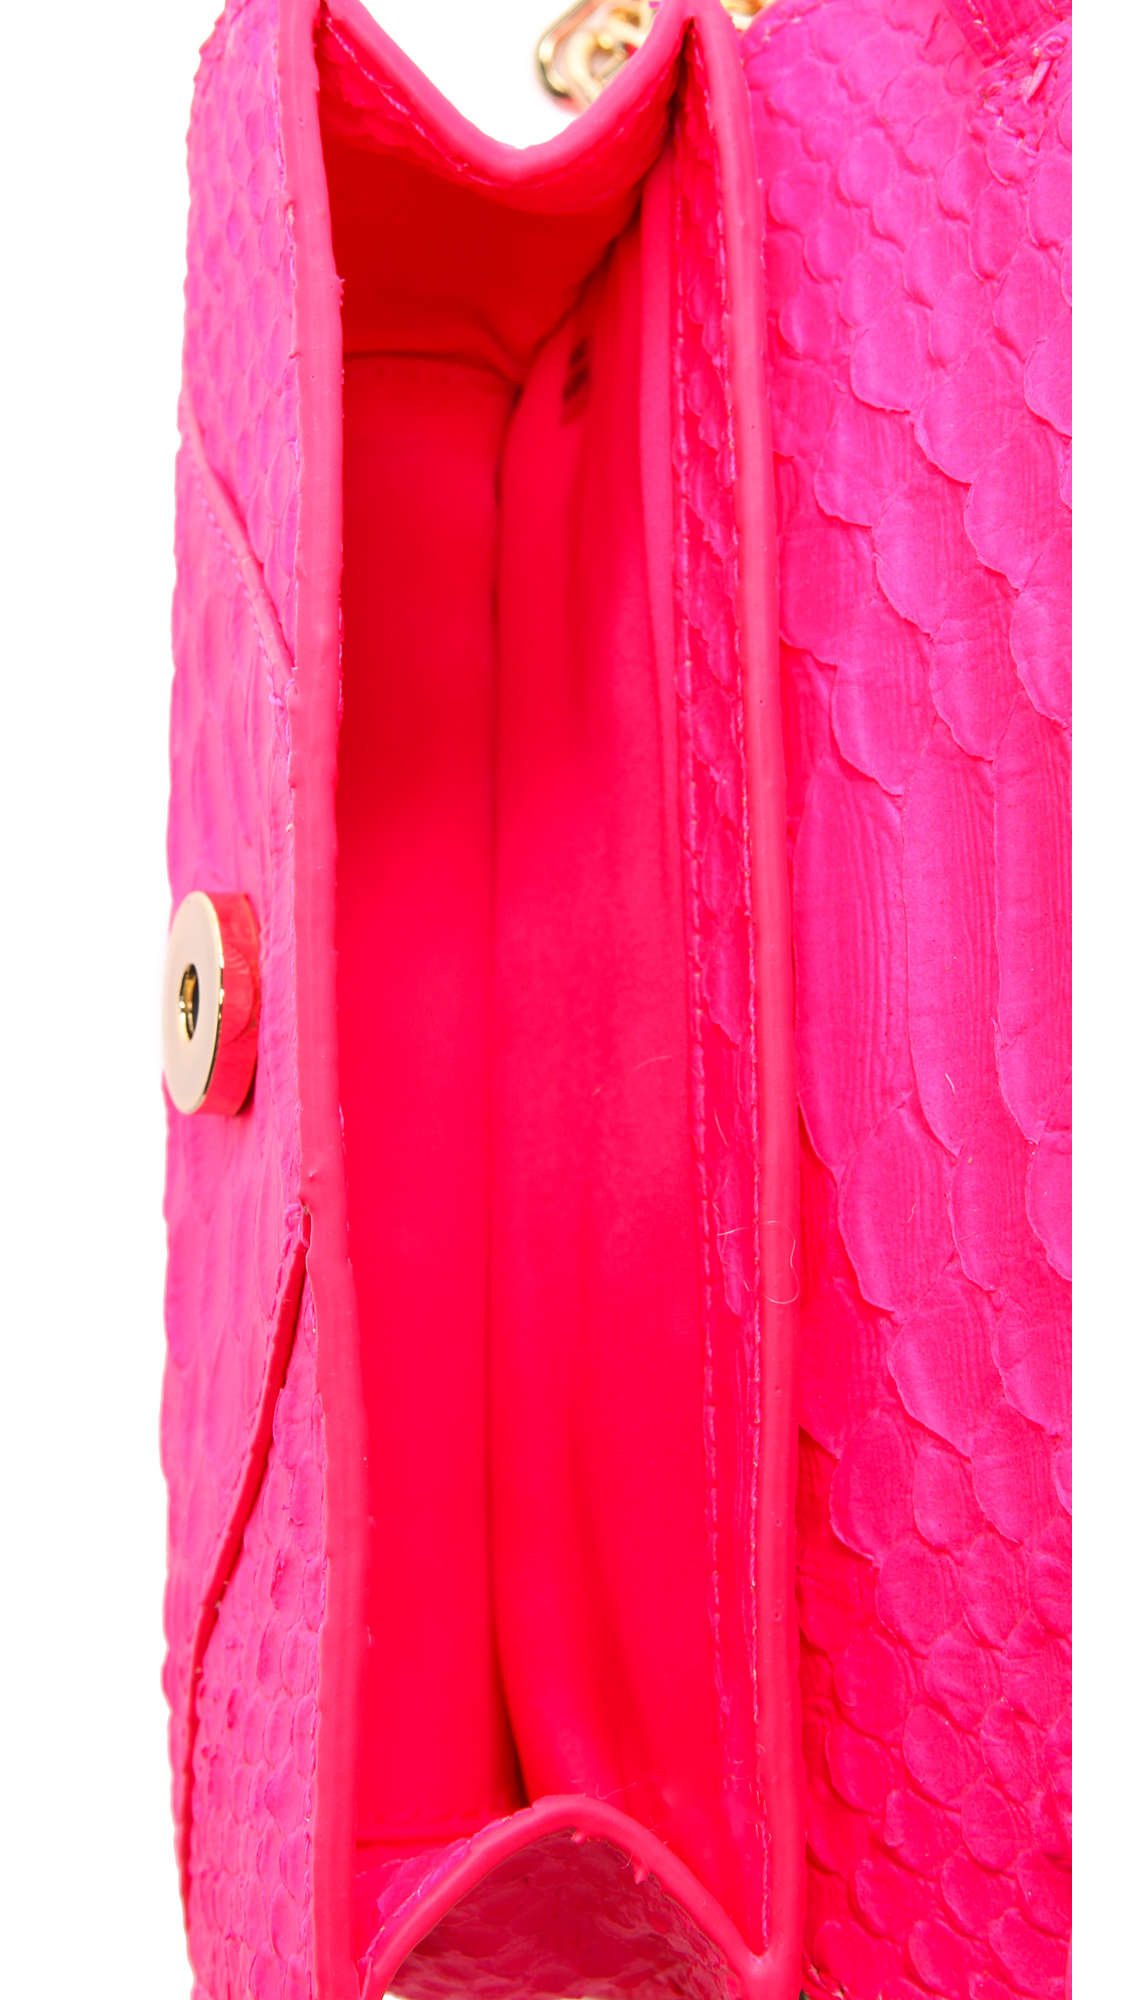 Lyst - Tory Burch Neon Cross Body Bag in Pink